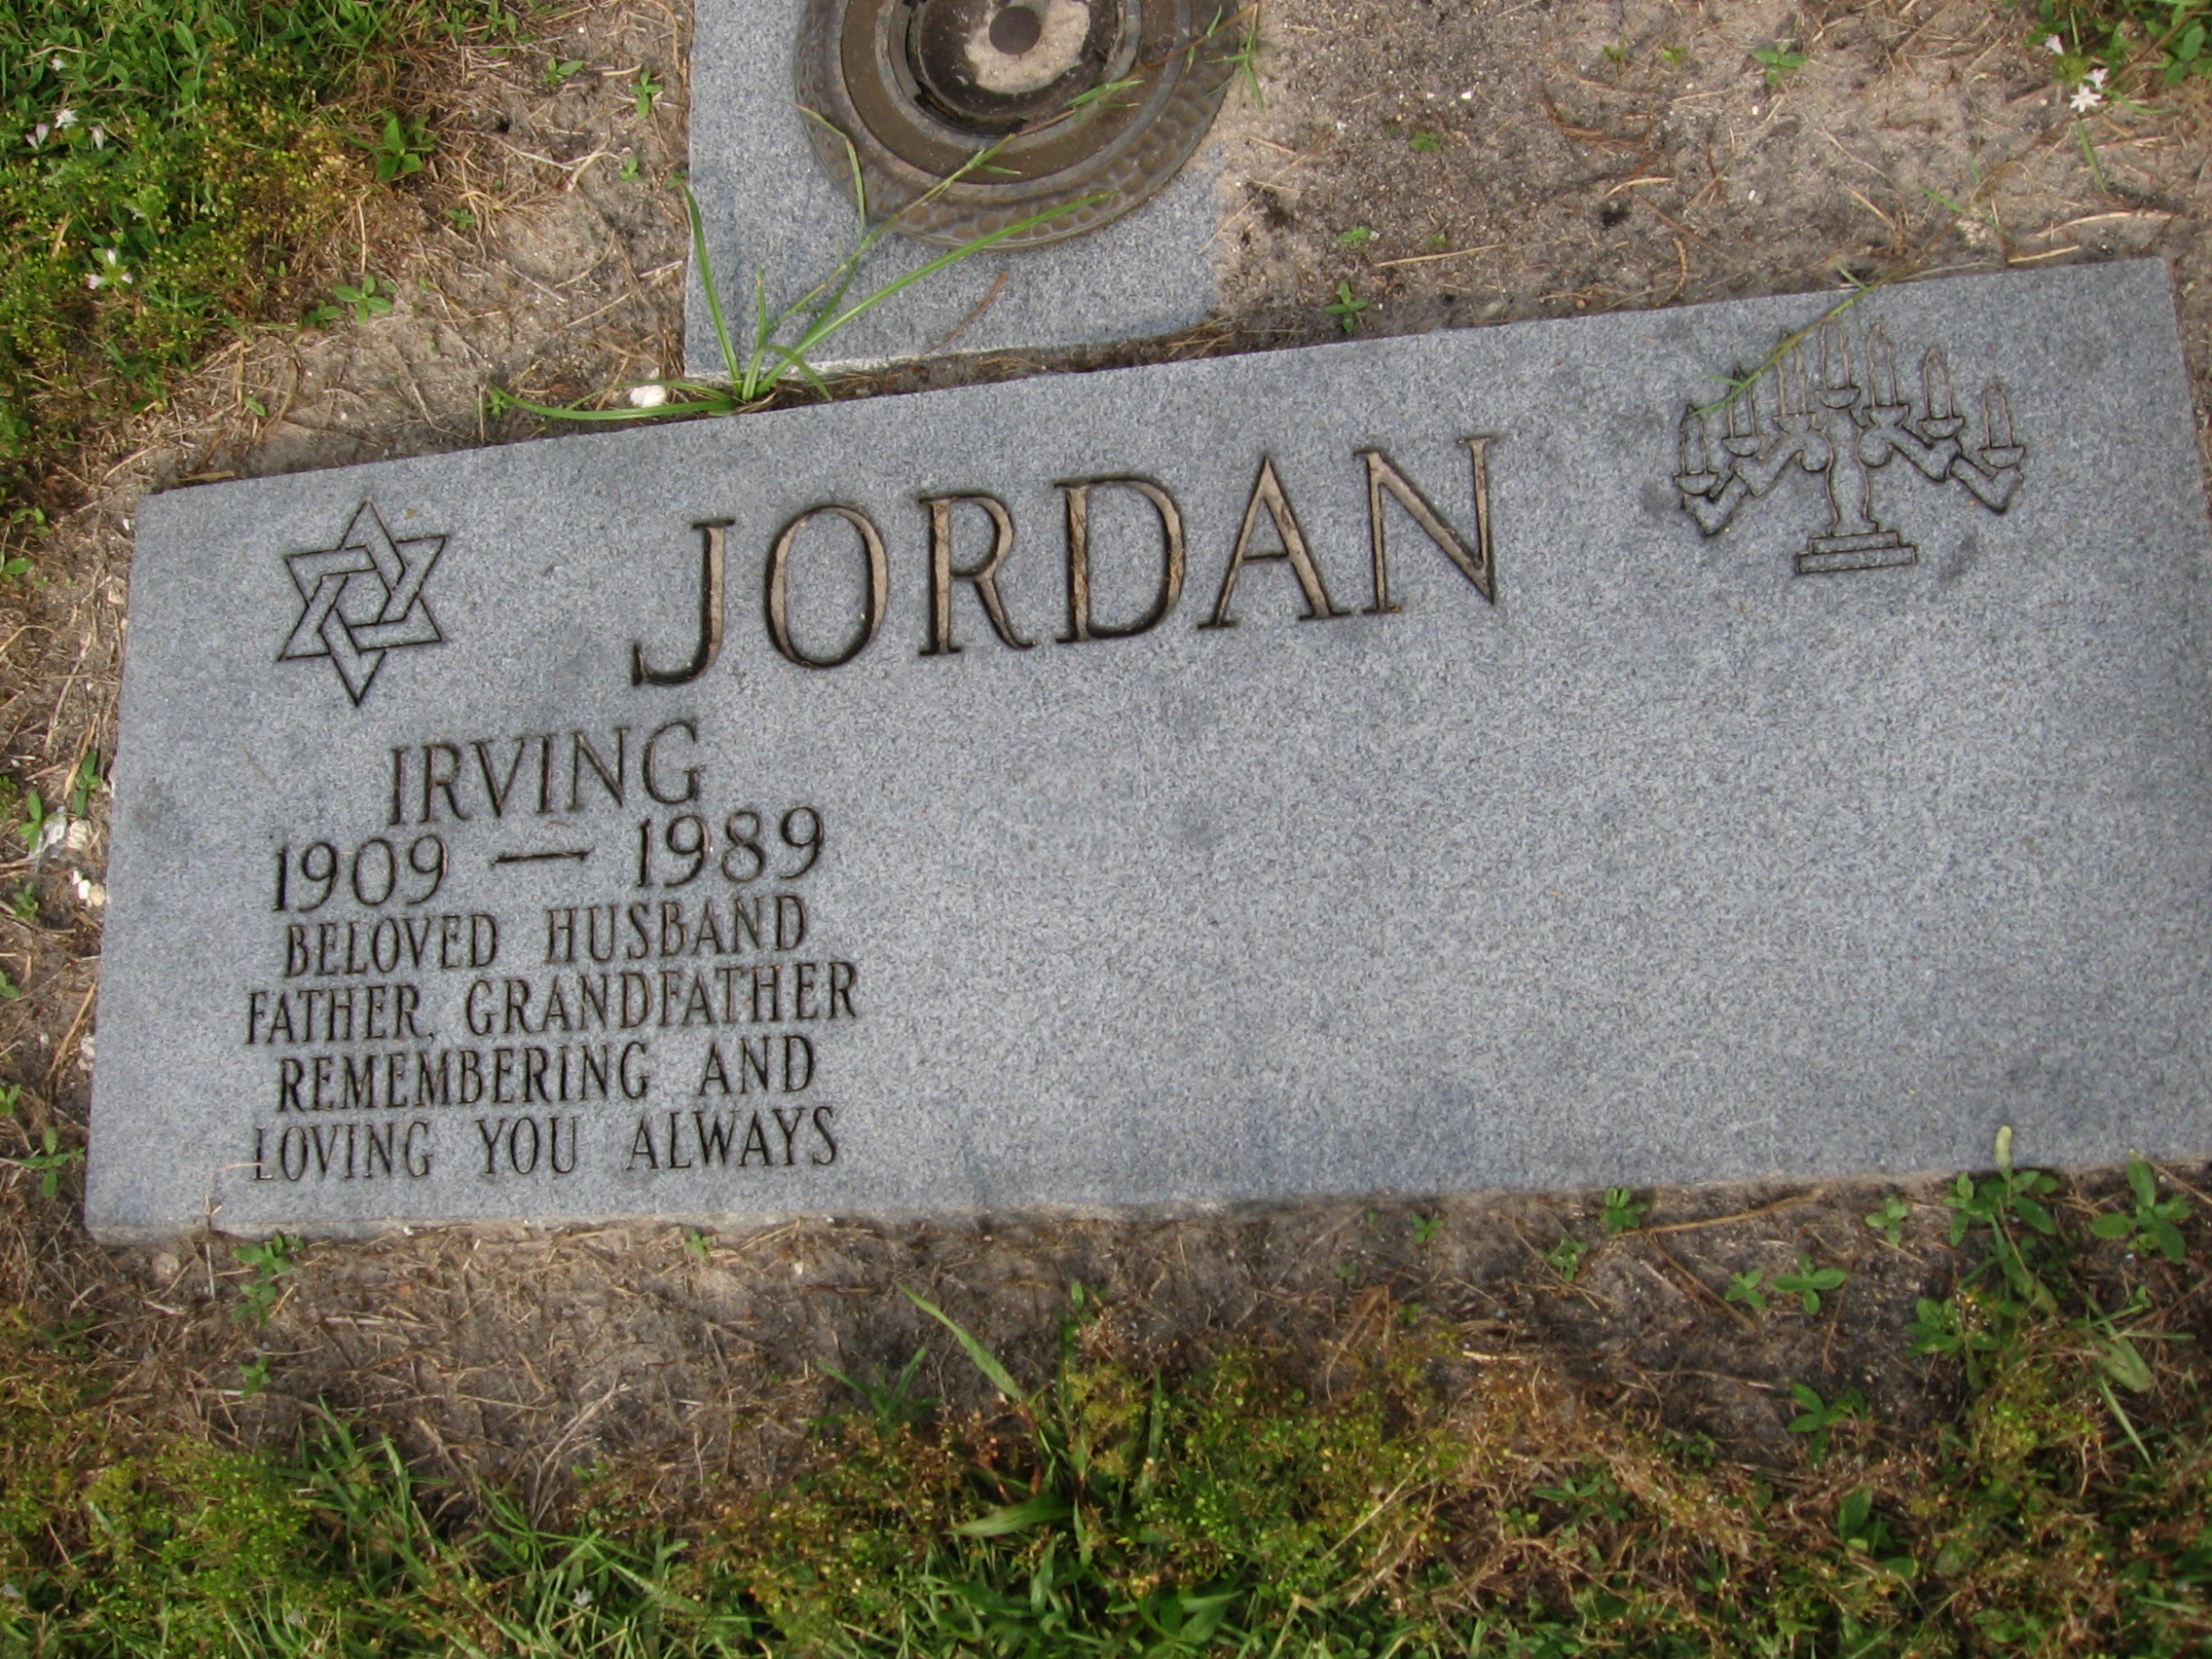 Irving Jordan